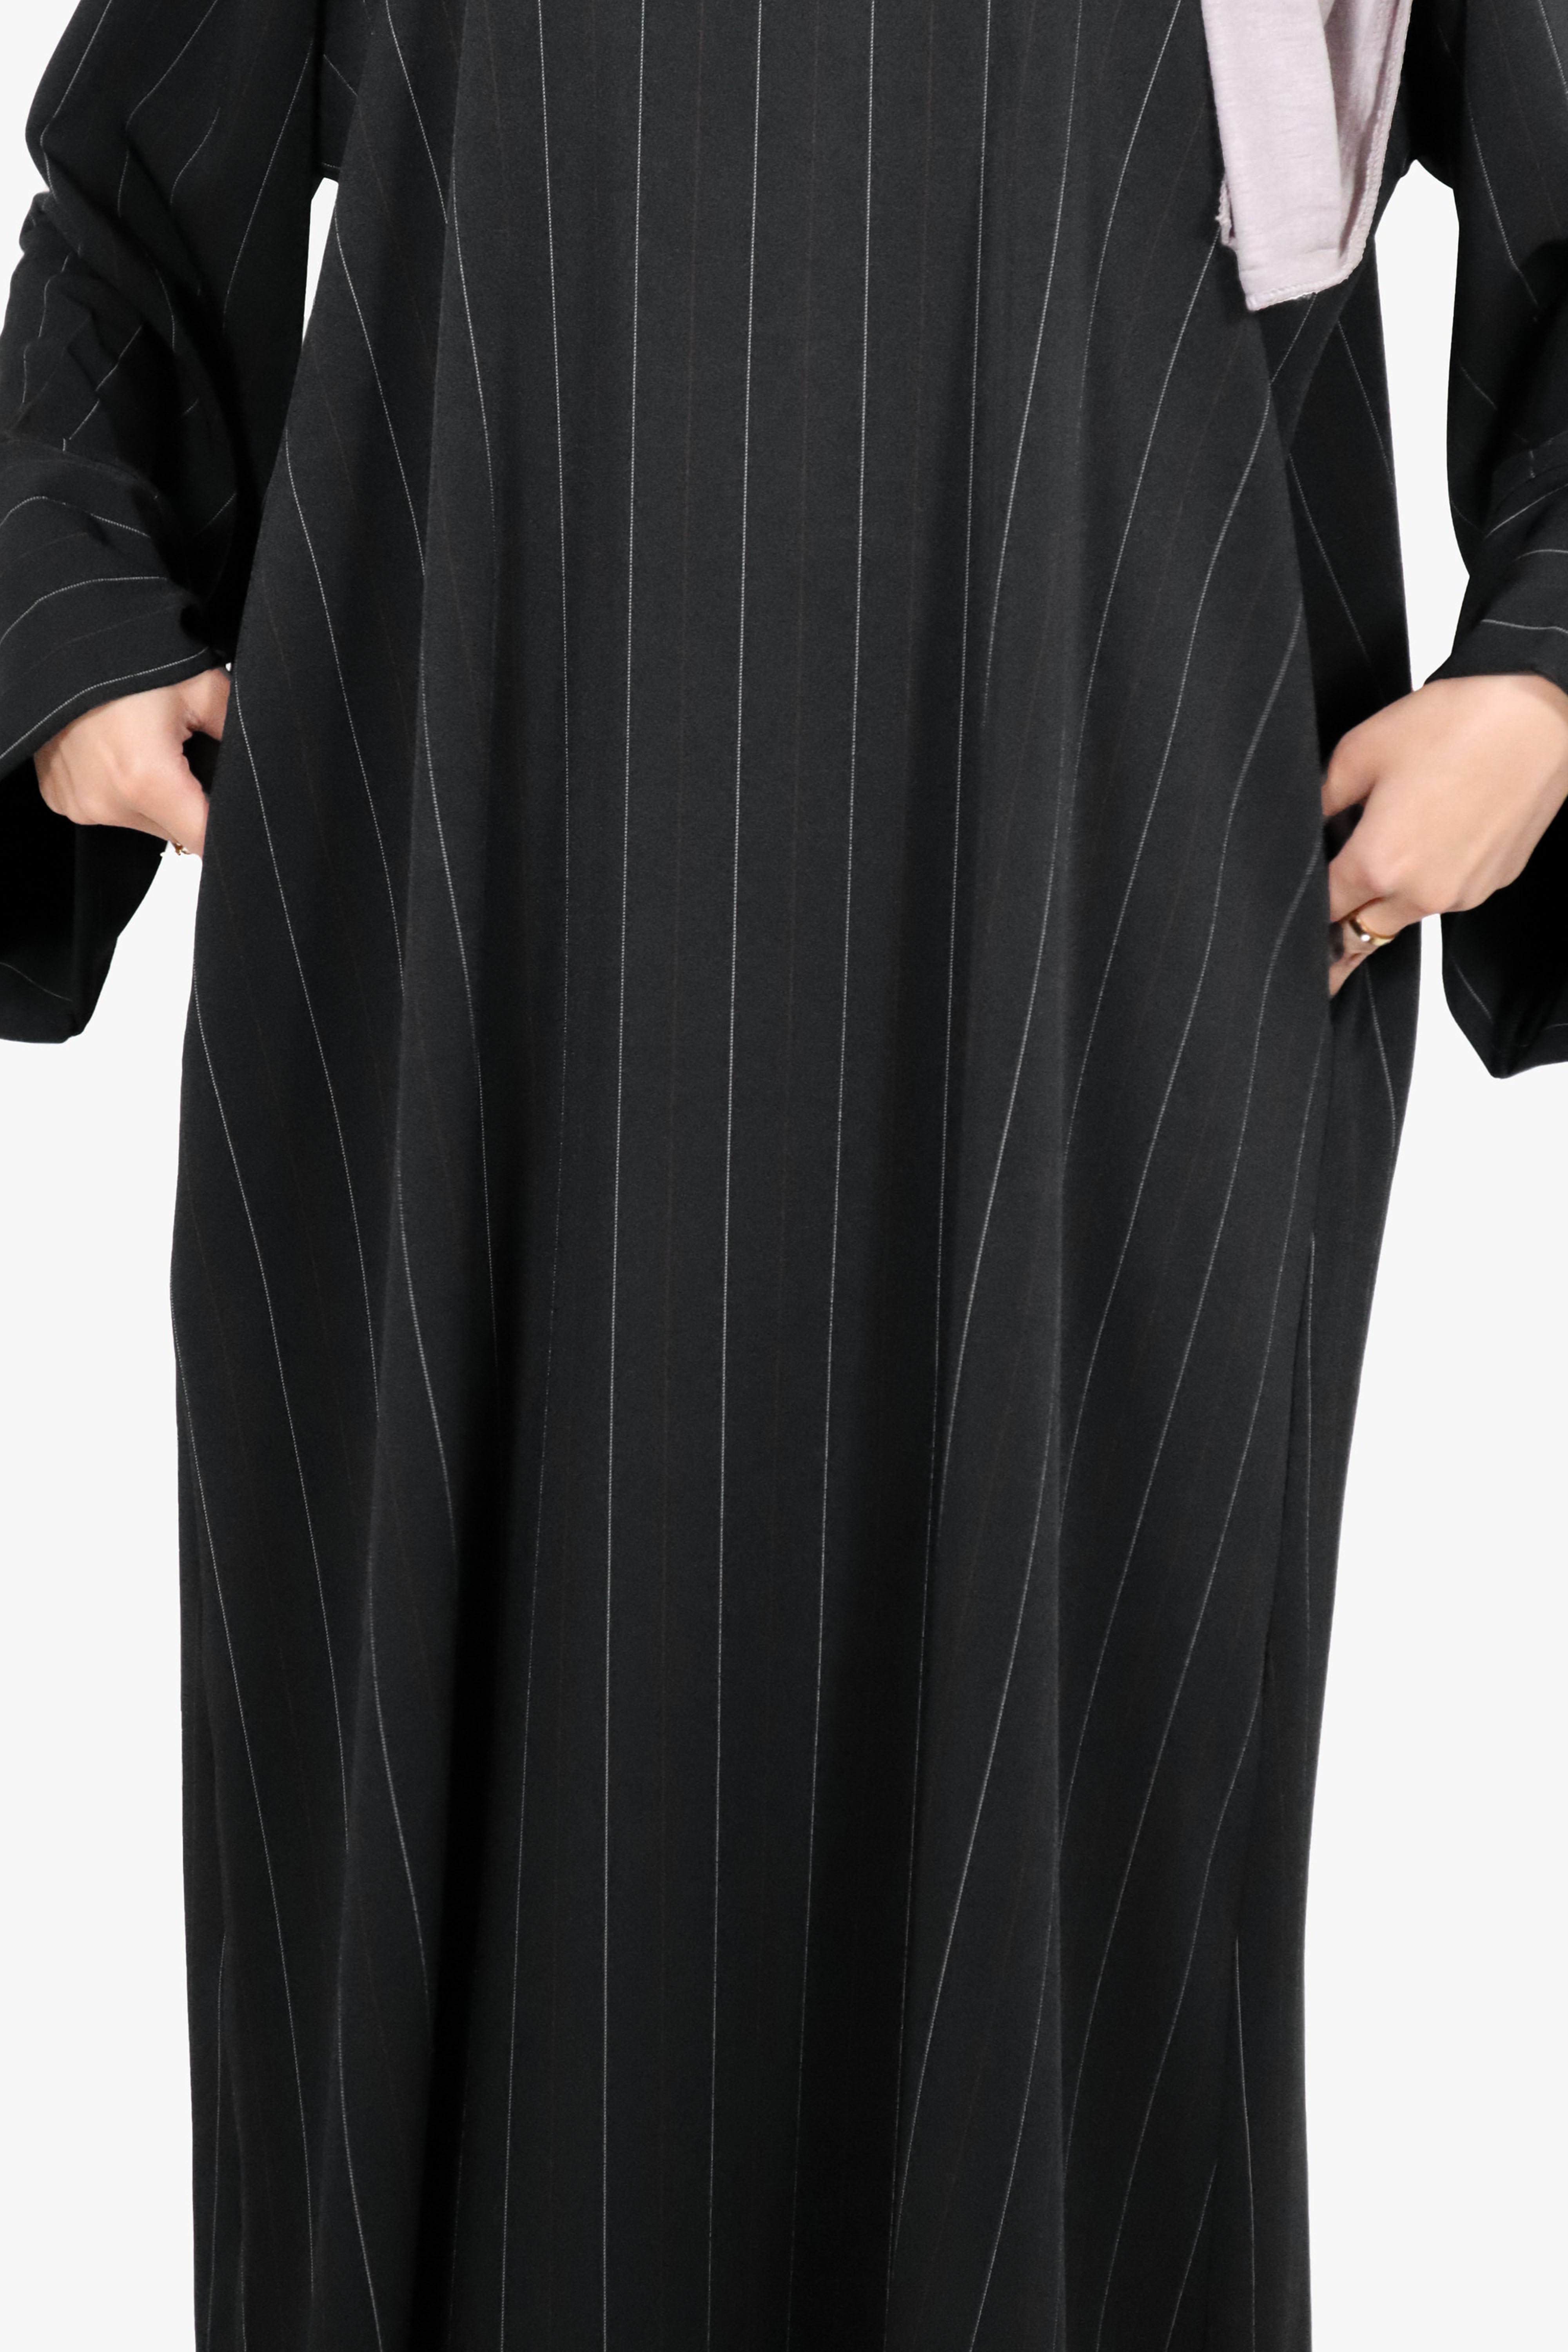 Black with White and Beige Striped Kimono Abaya